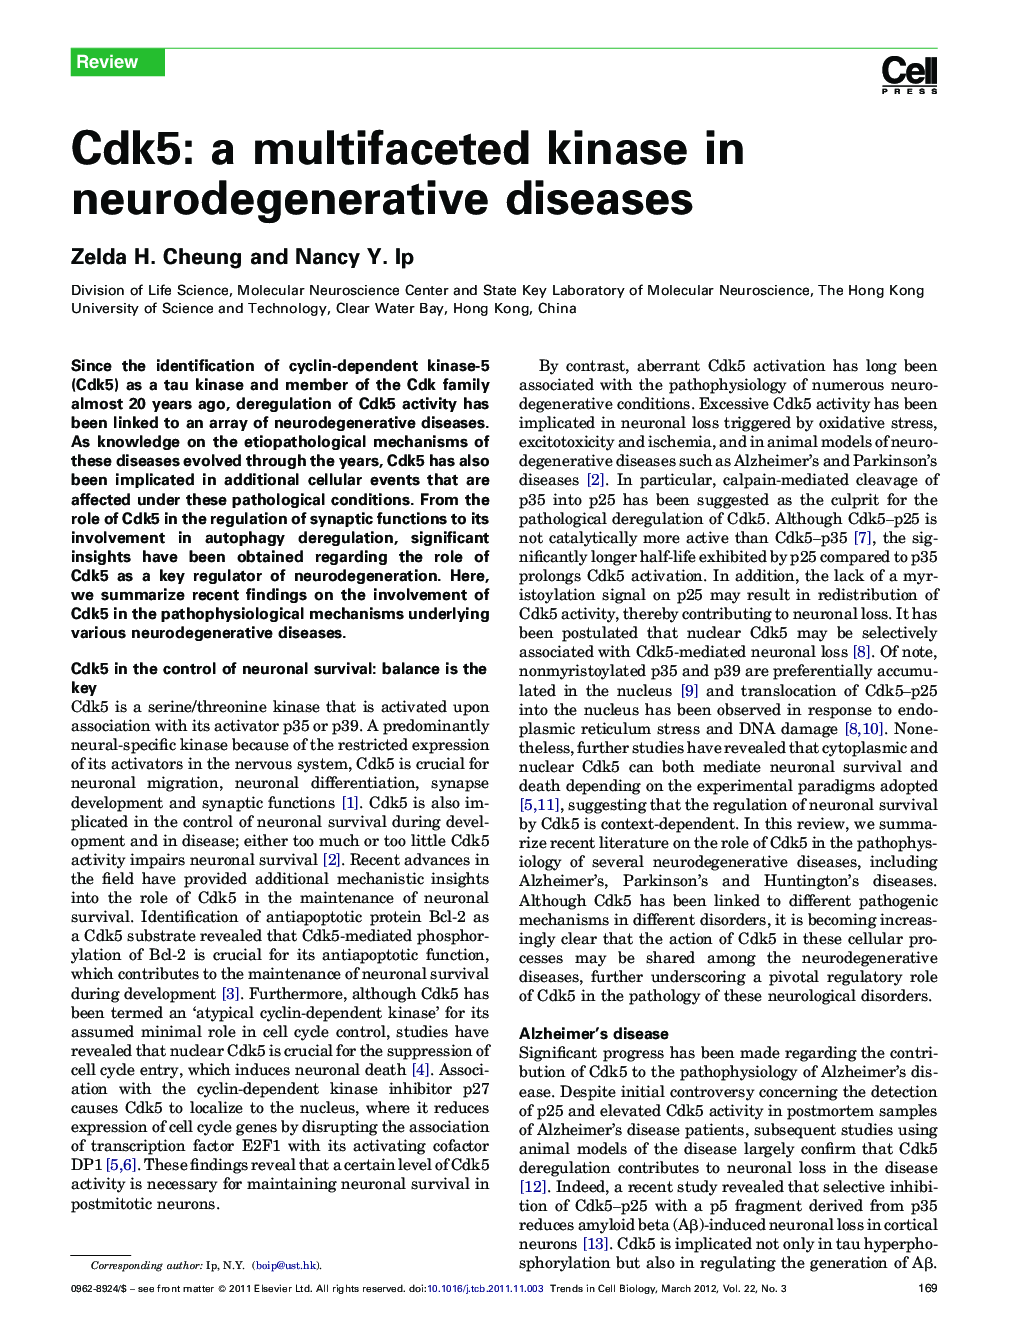 Cdk5: a multifaceted kinase in neurodegenerative diseases